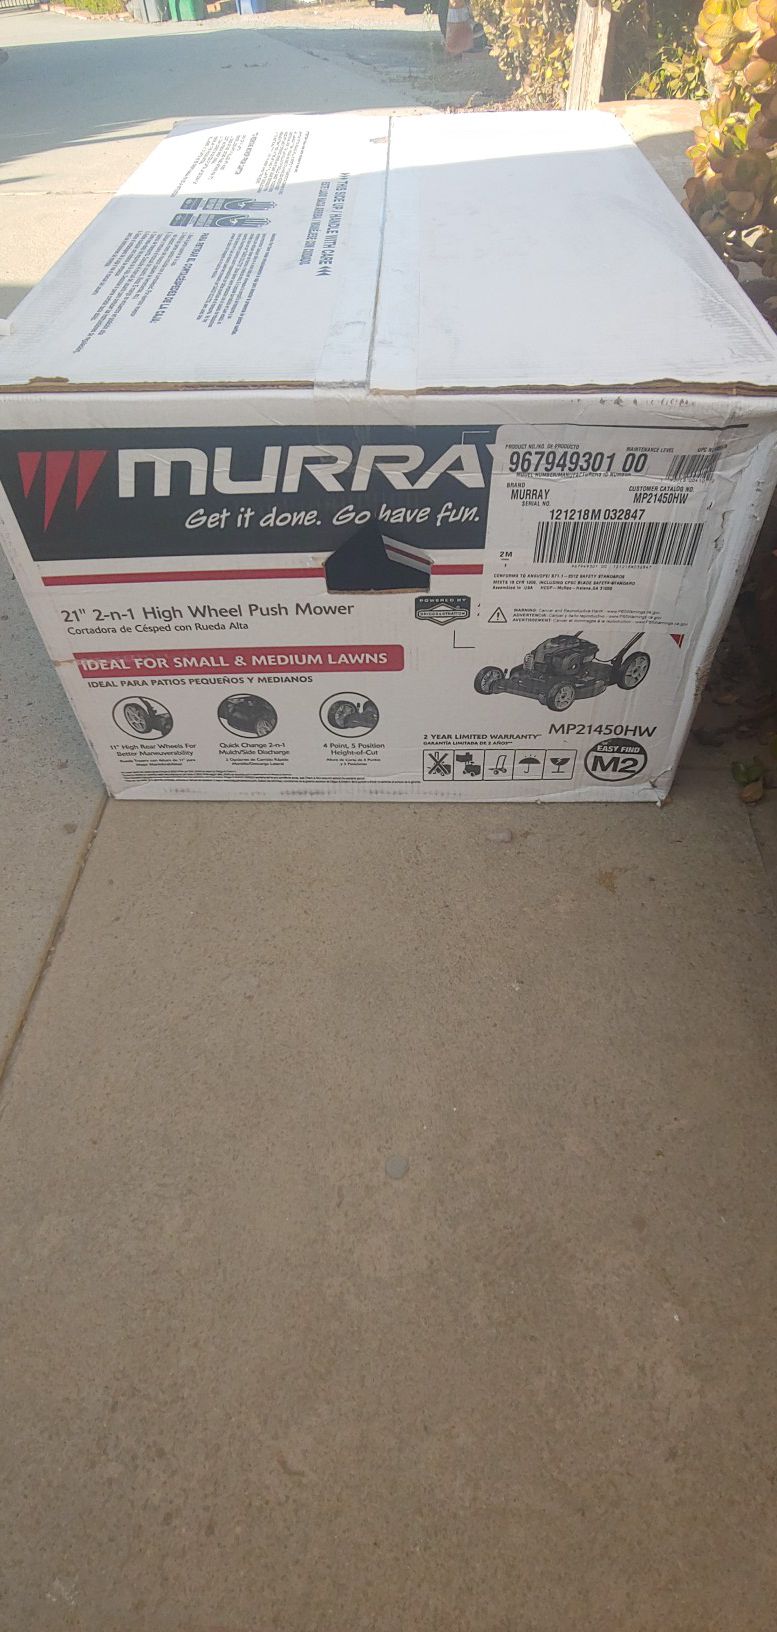 Brand new Murray lawn mower